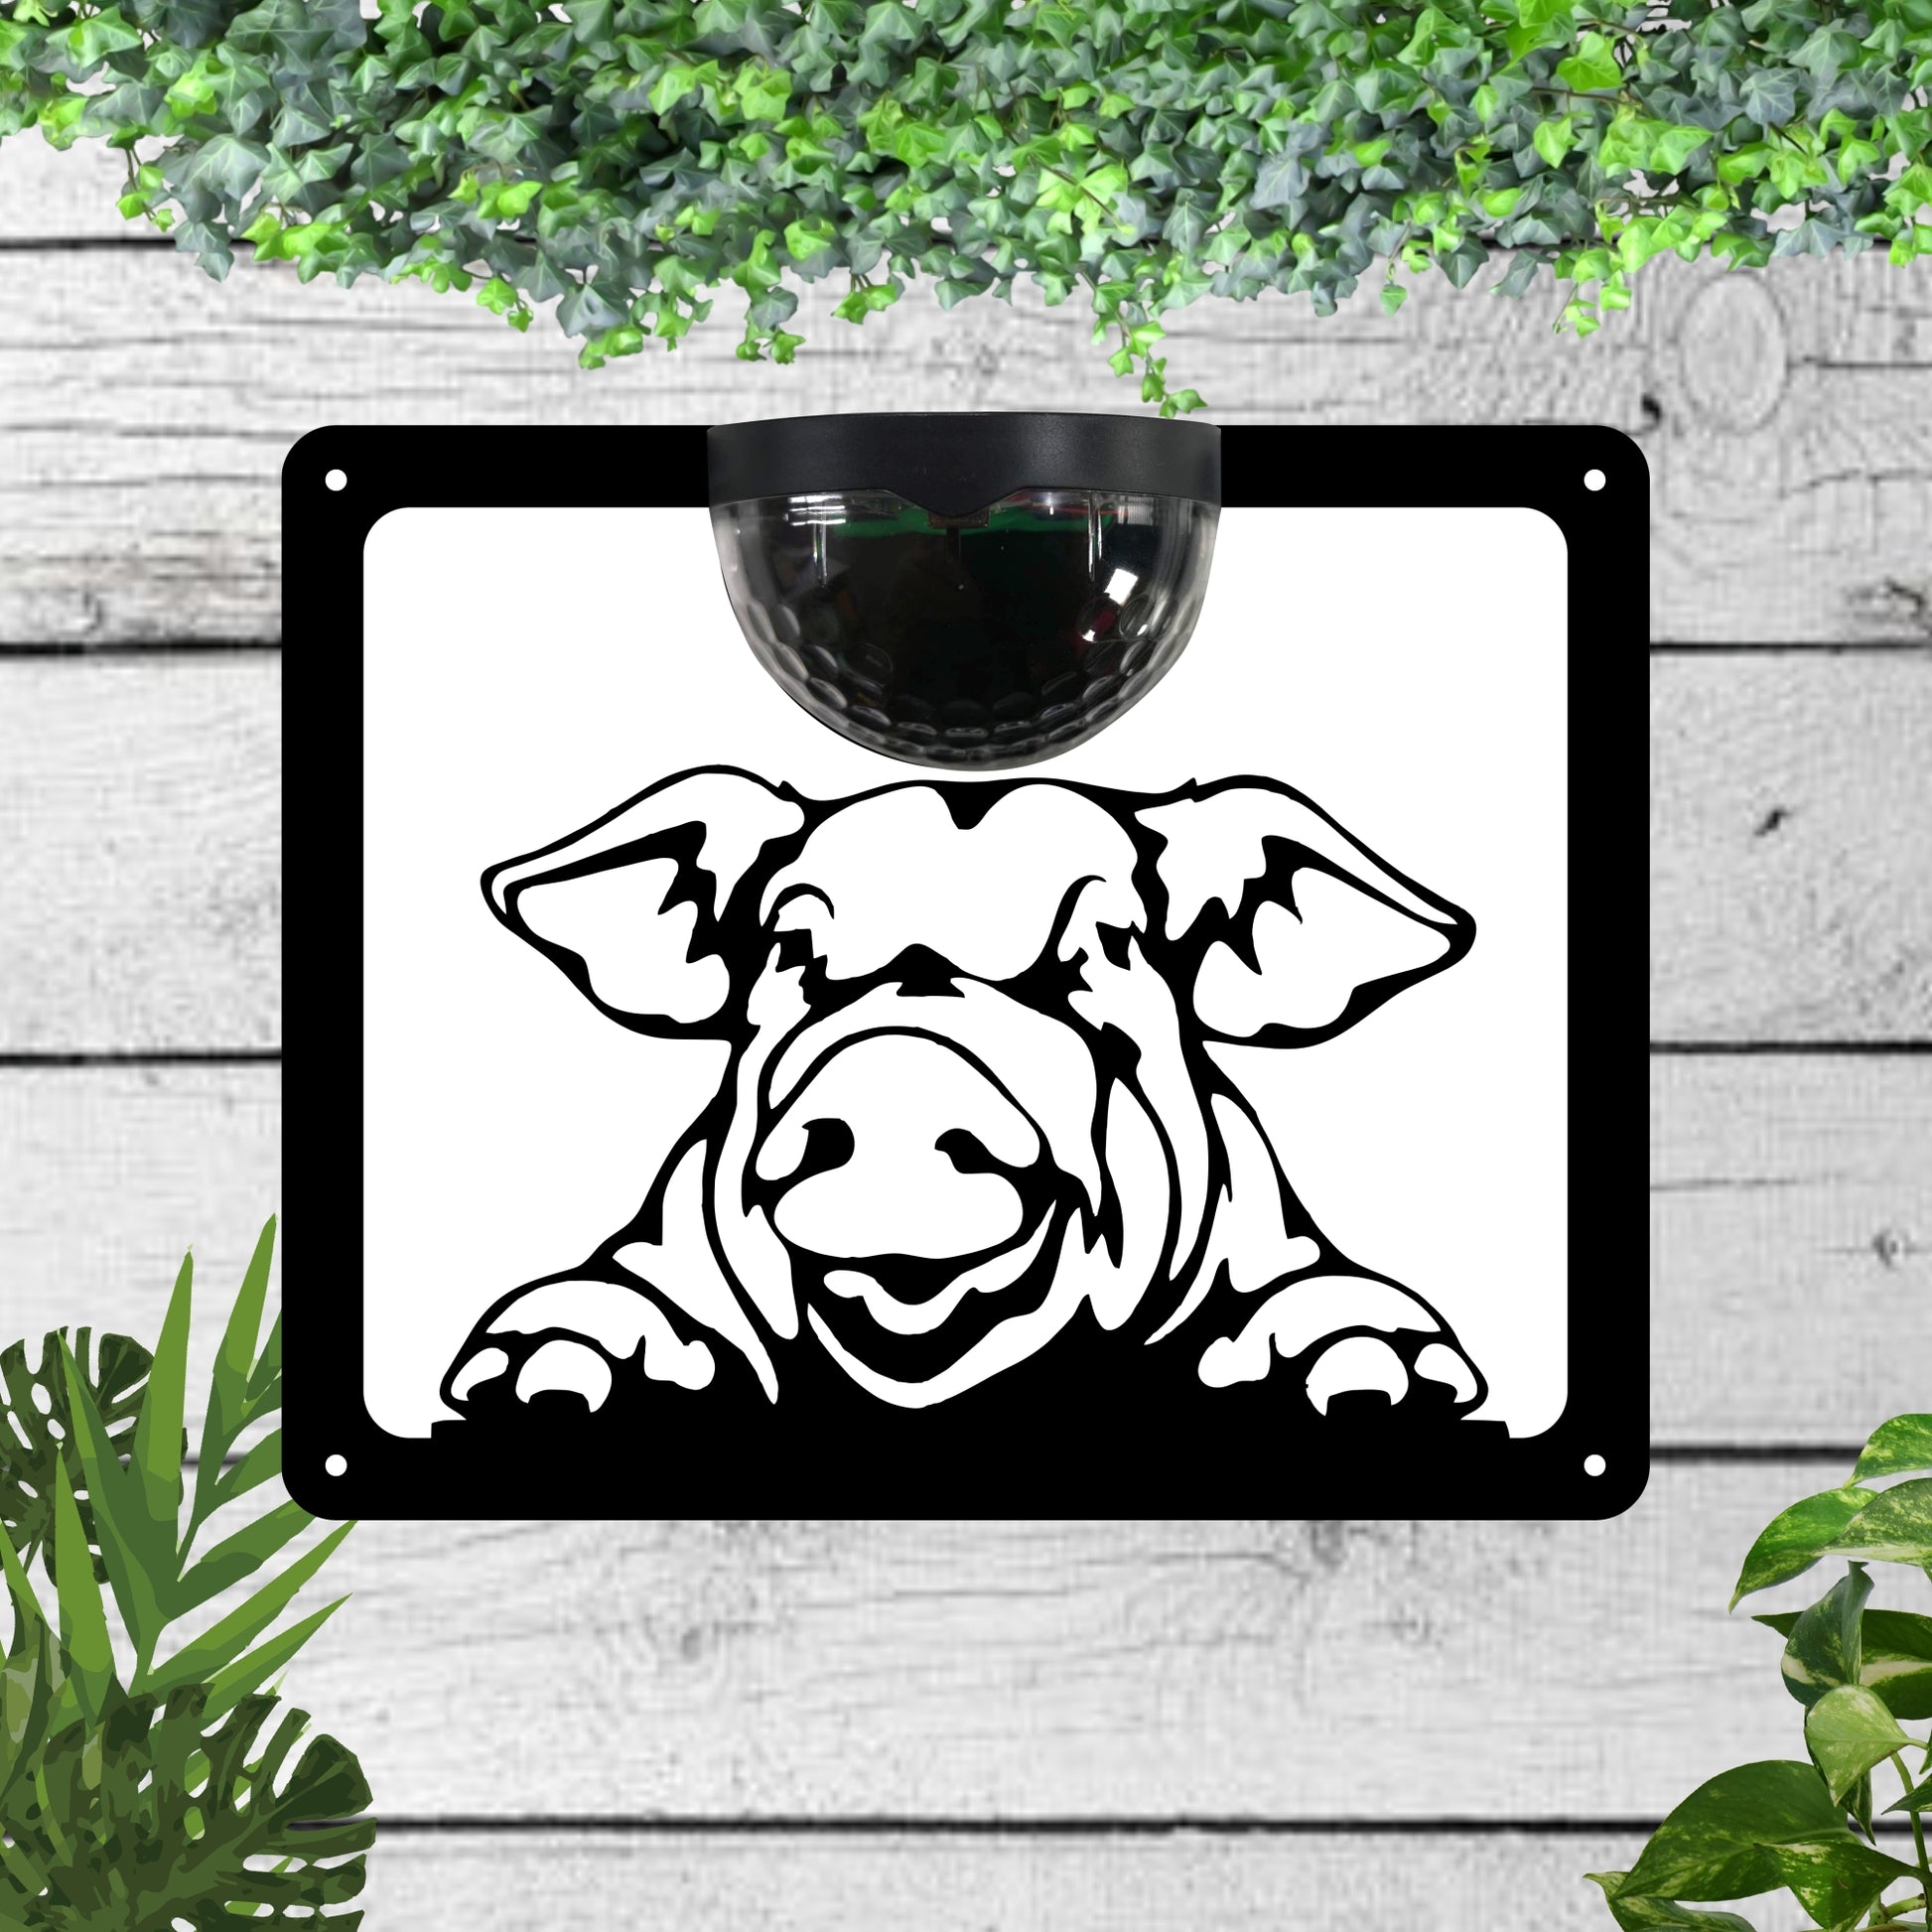 Garden Solar Light Wall Plaque with a Pig | John Alans